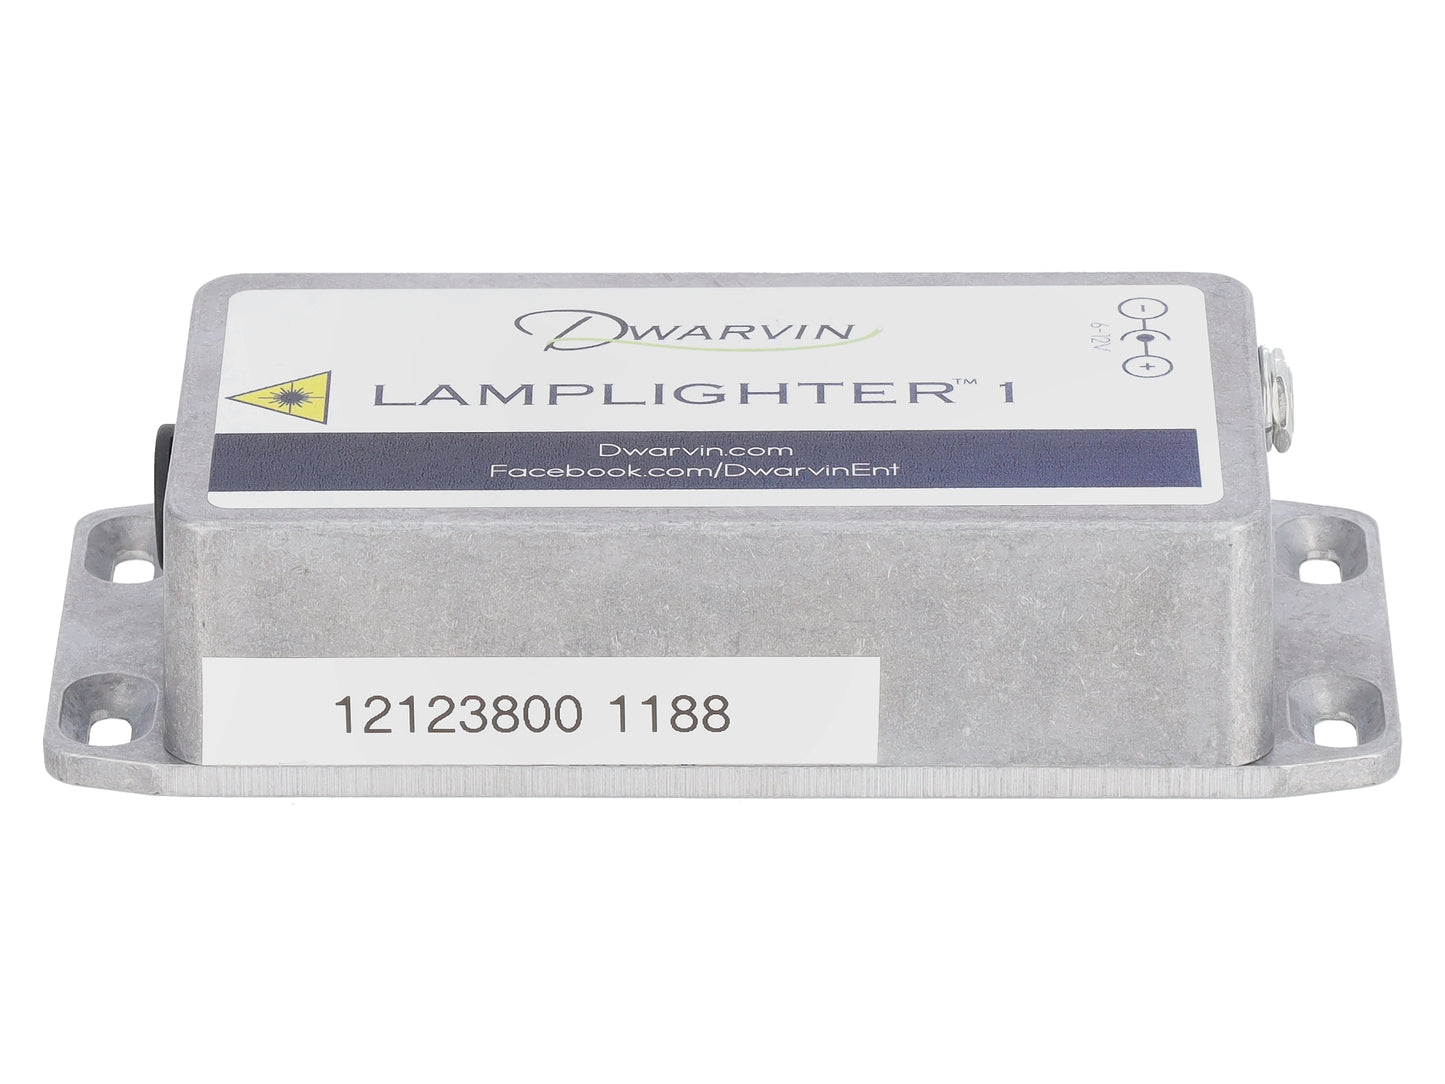 Dwarvin DV101 Lamplighter 1 for Fiber Lighting Systems